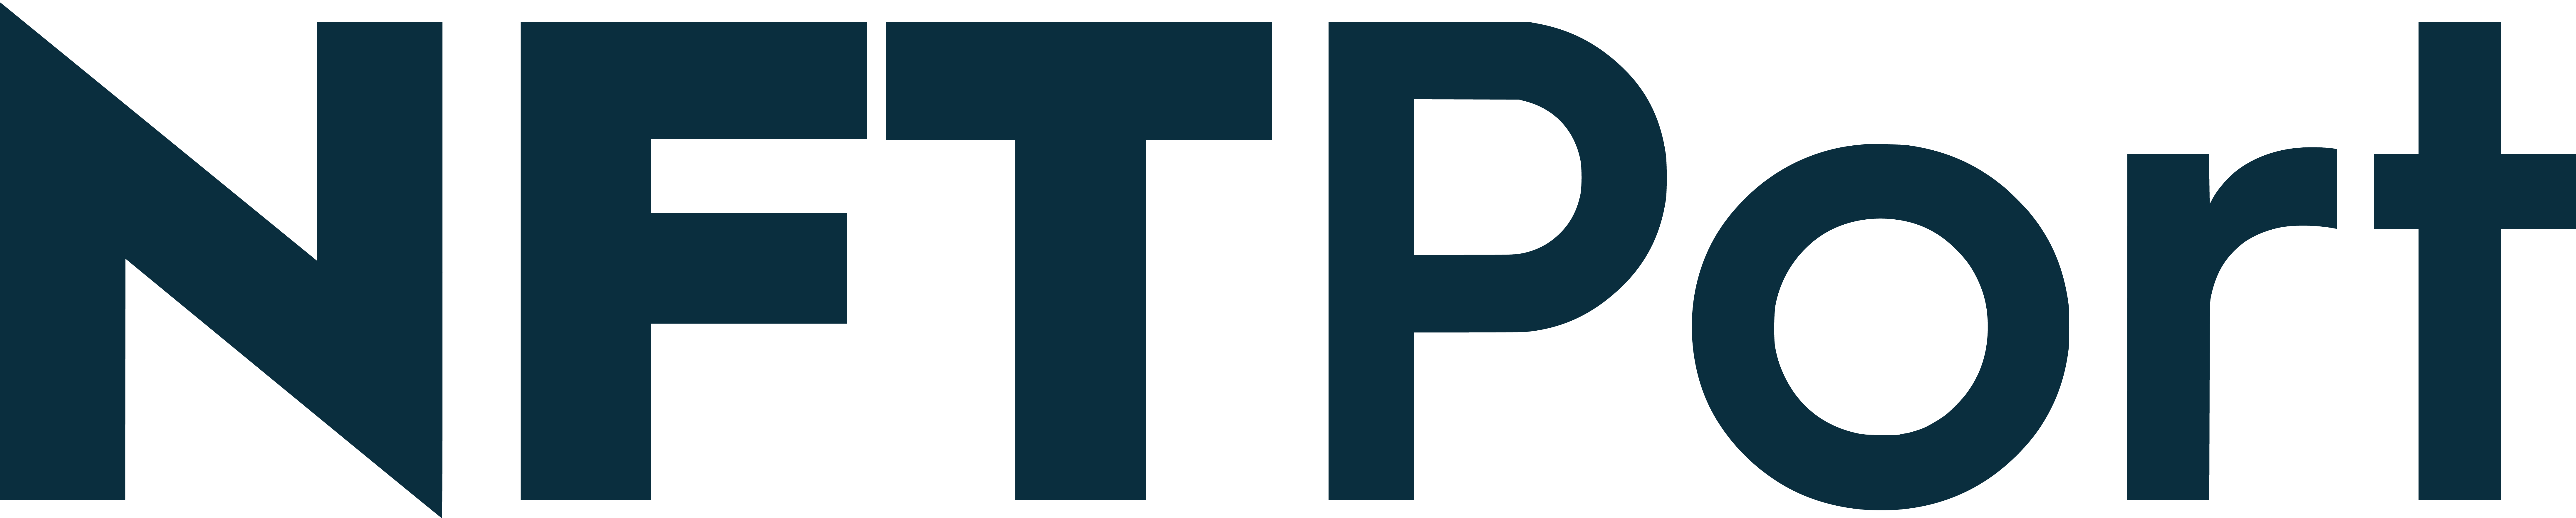 NFTPort logo